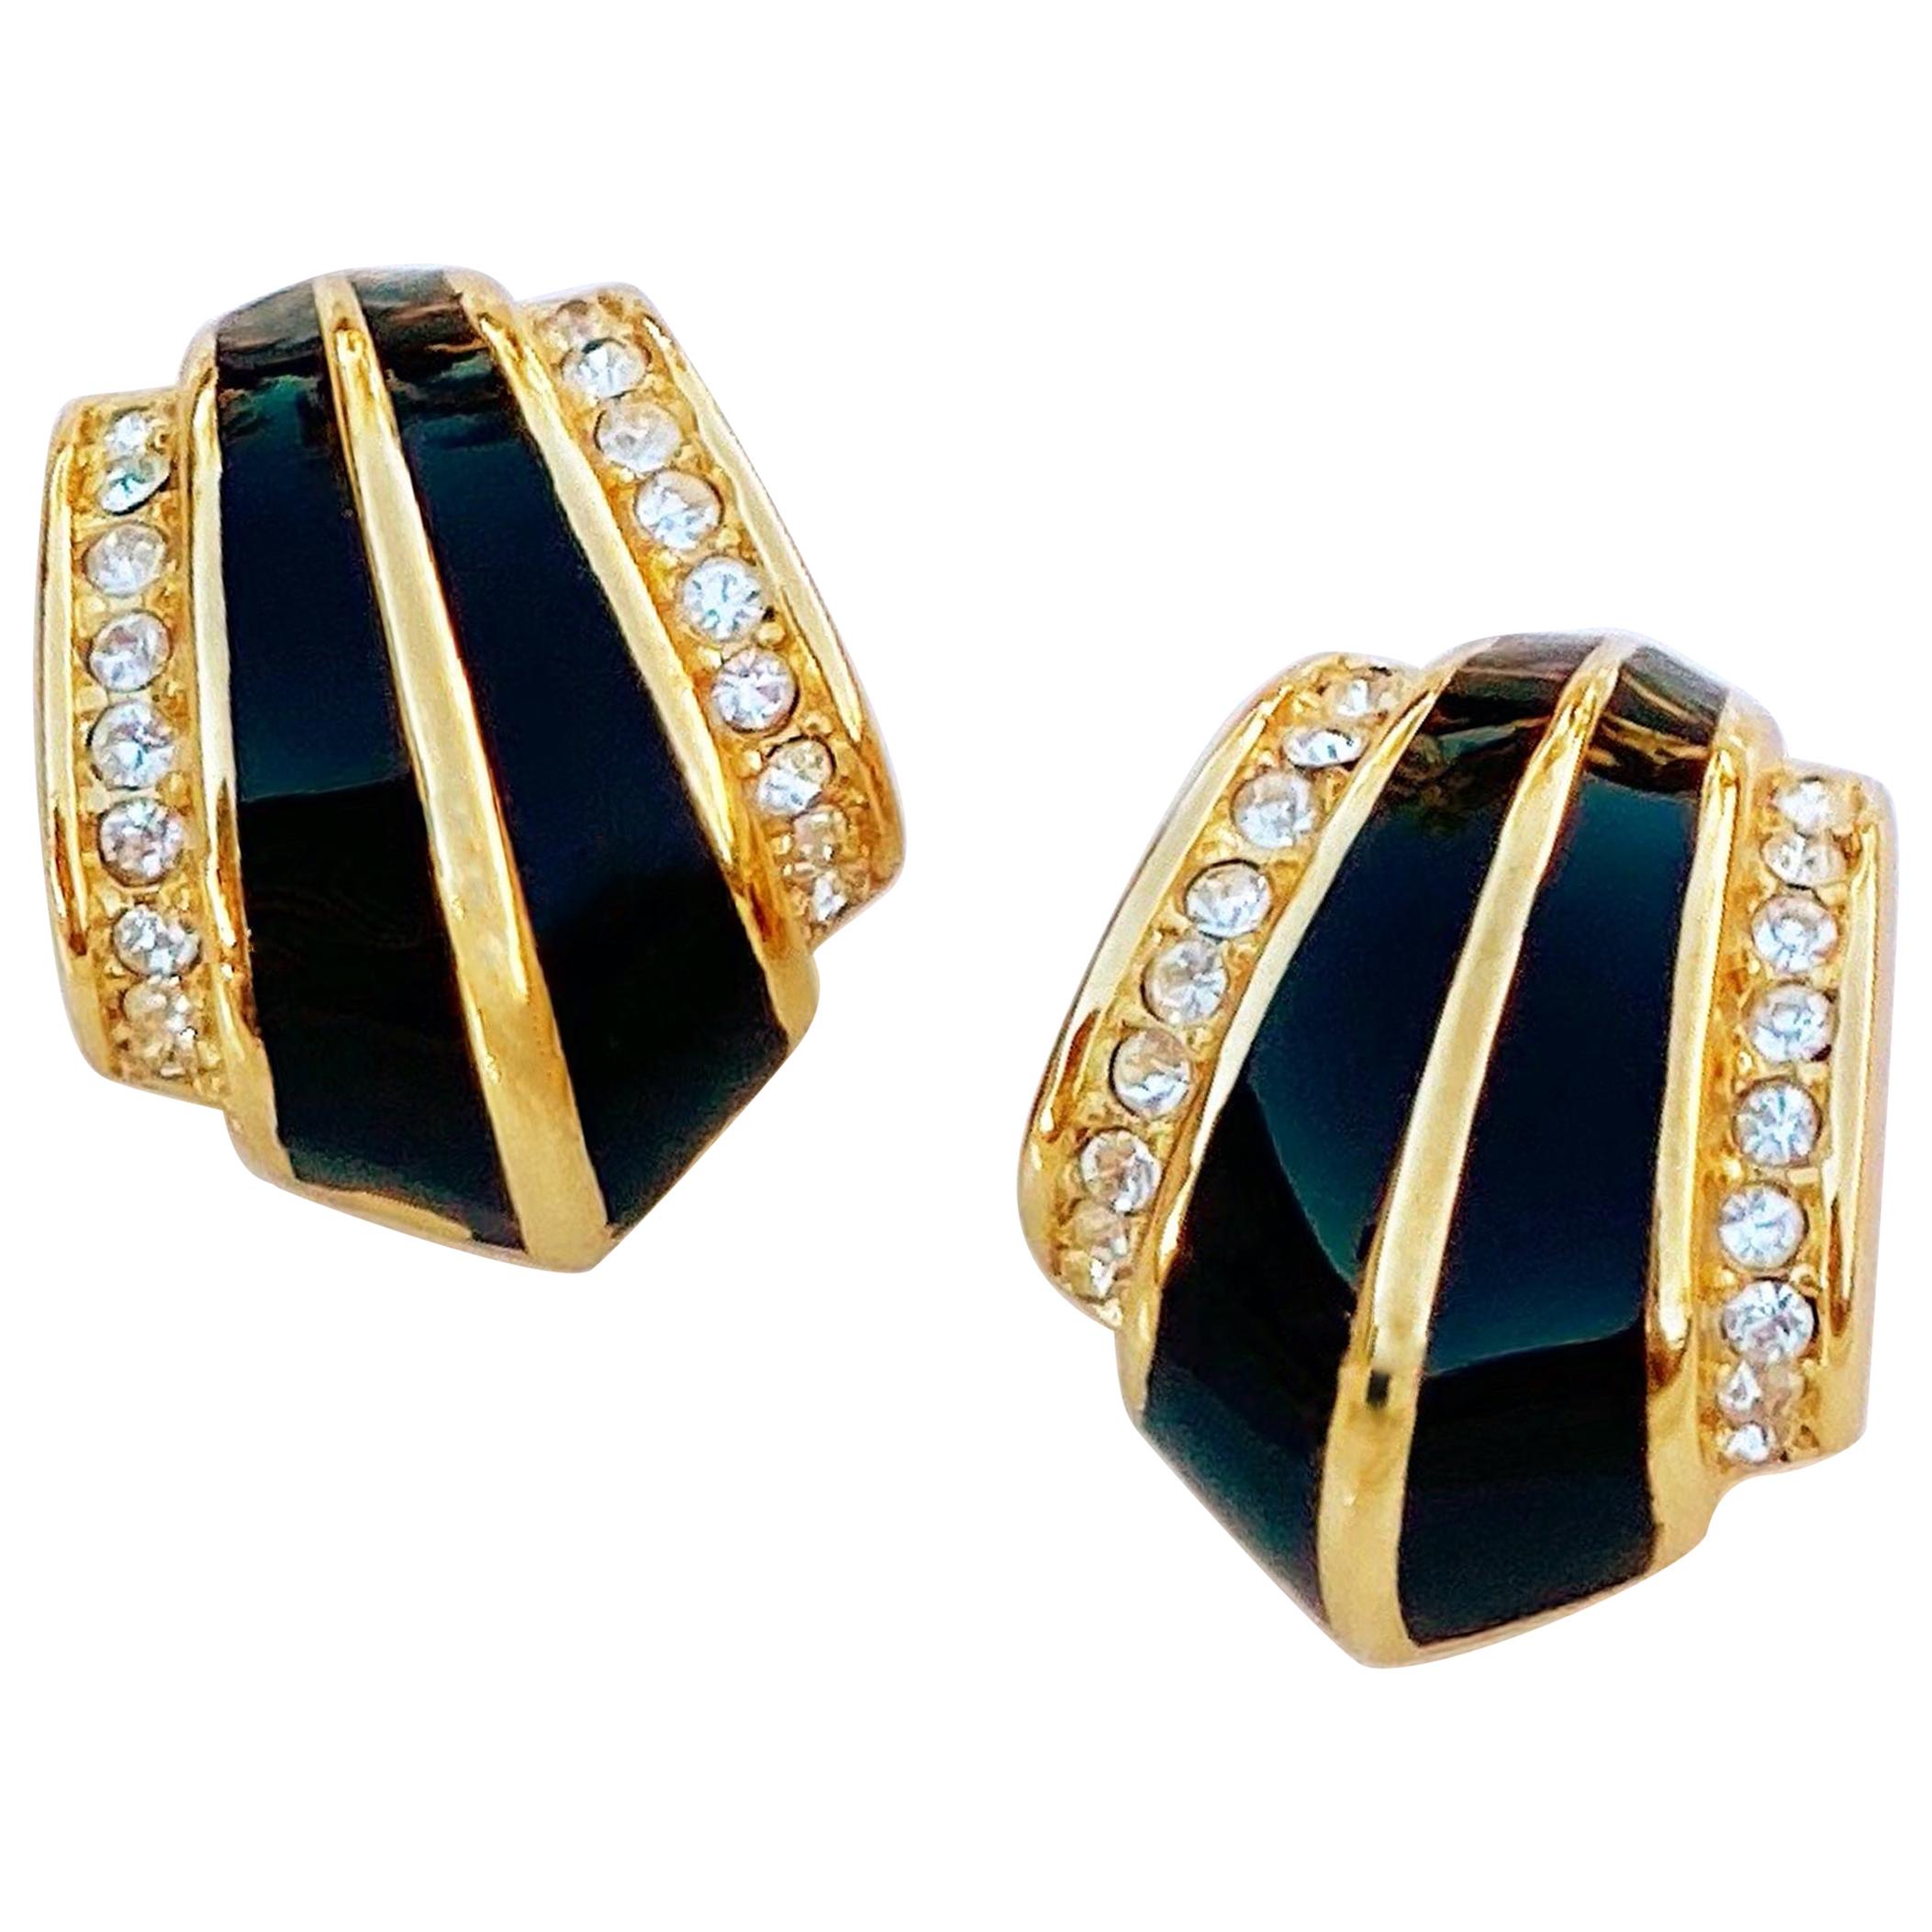 Gilt & Black Enamel Art Deco Style Earrings w Crystals by Christian Dior, 1980s